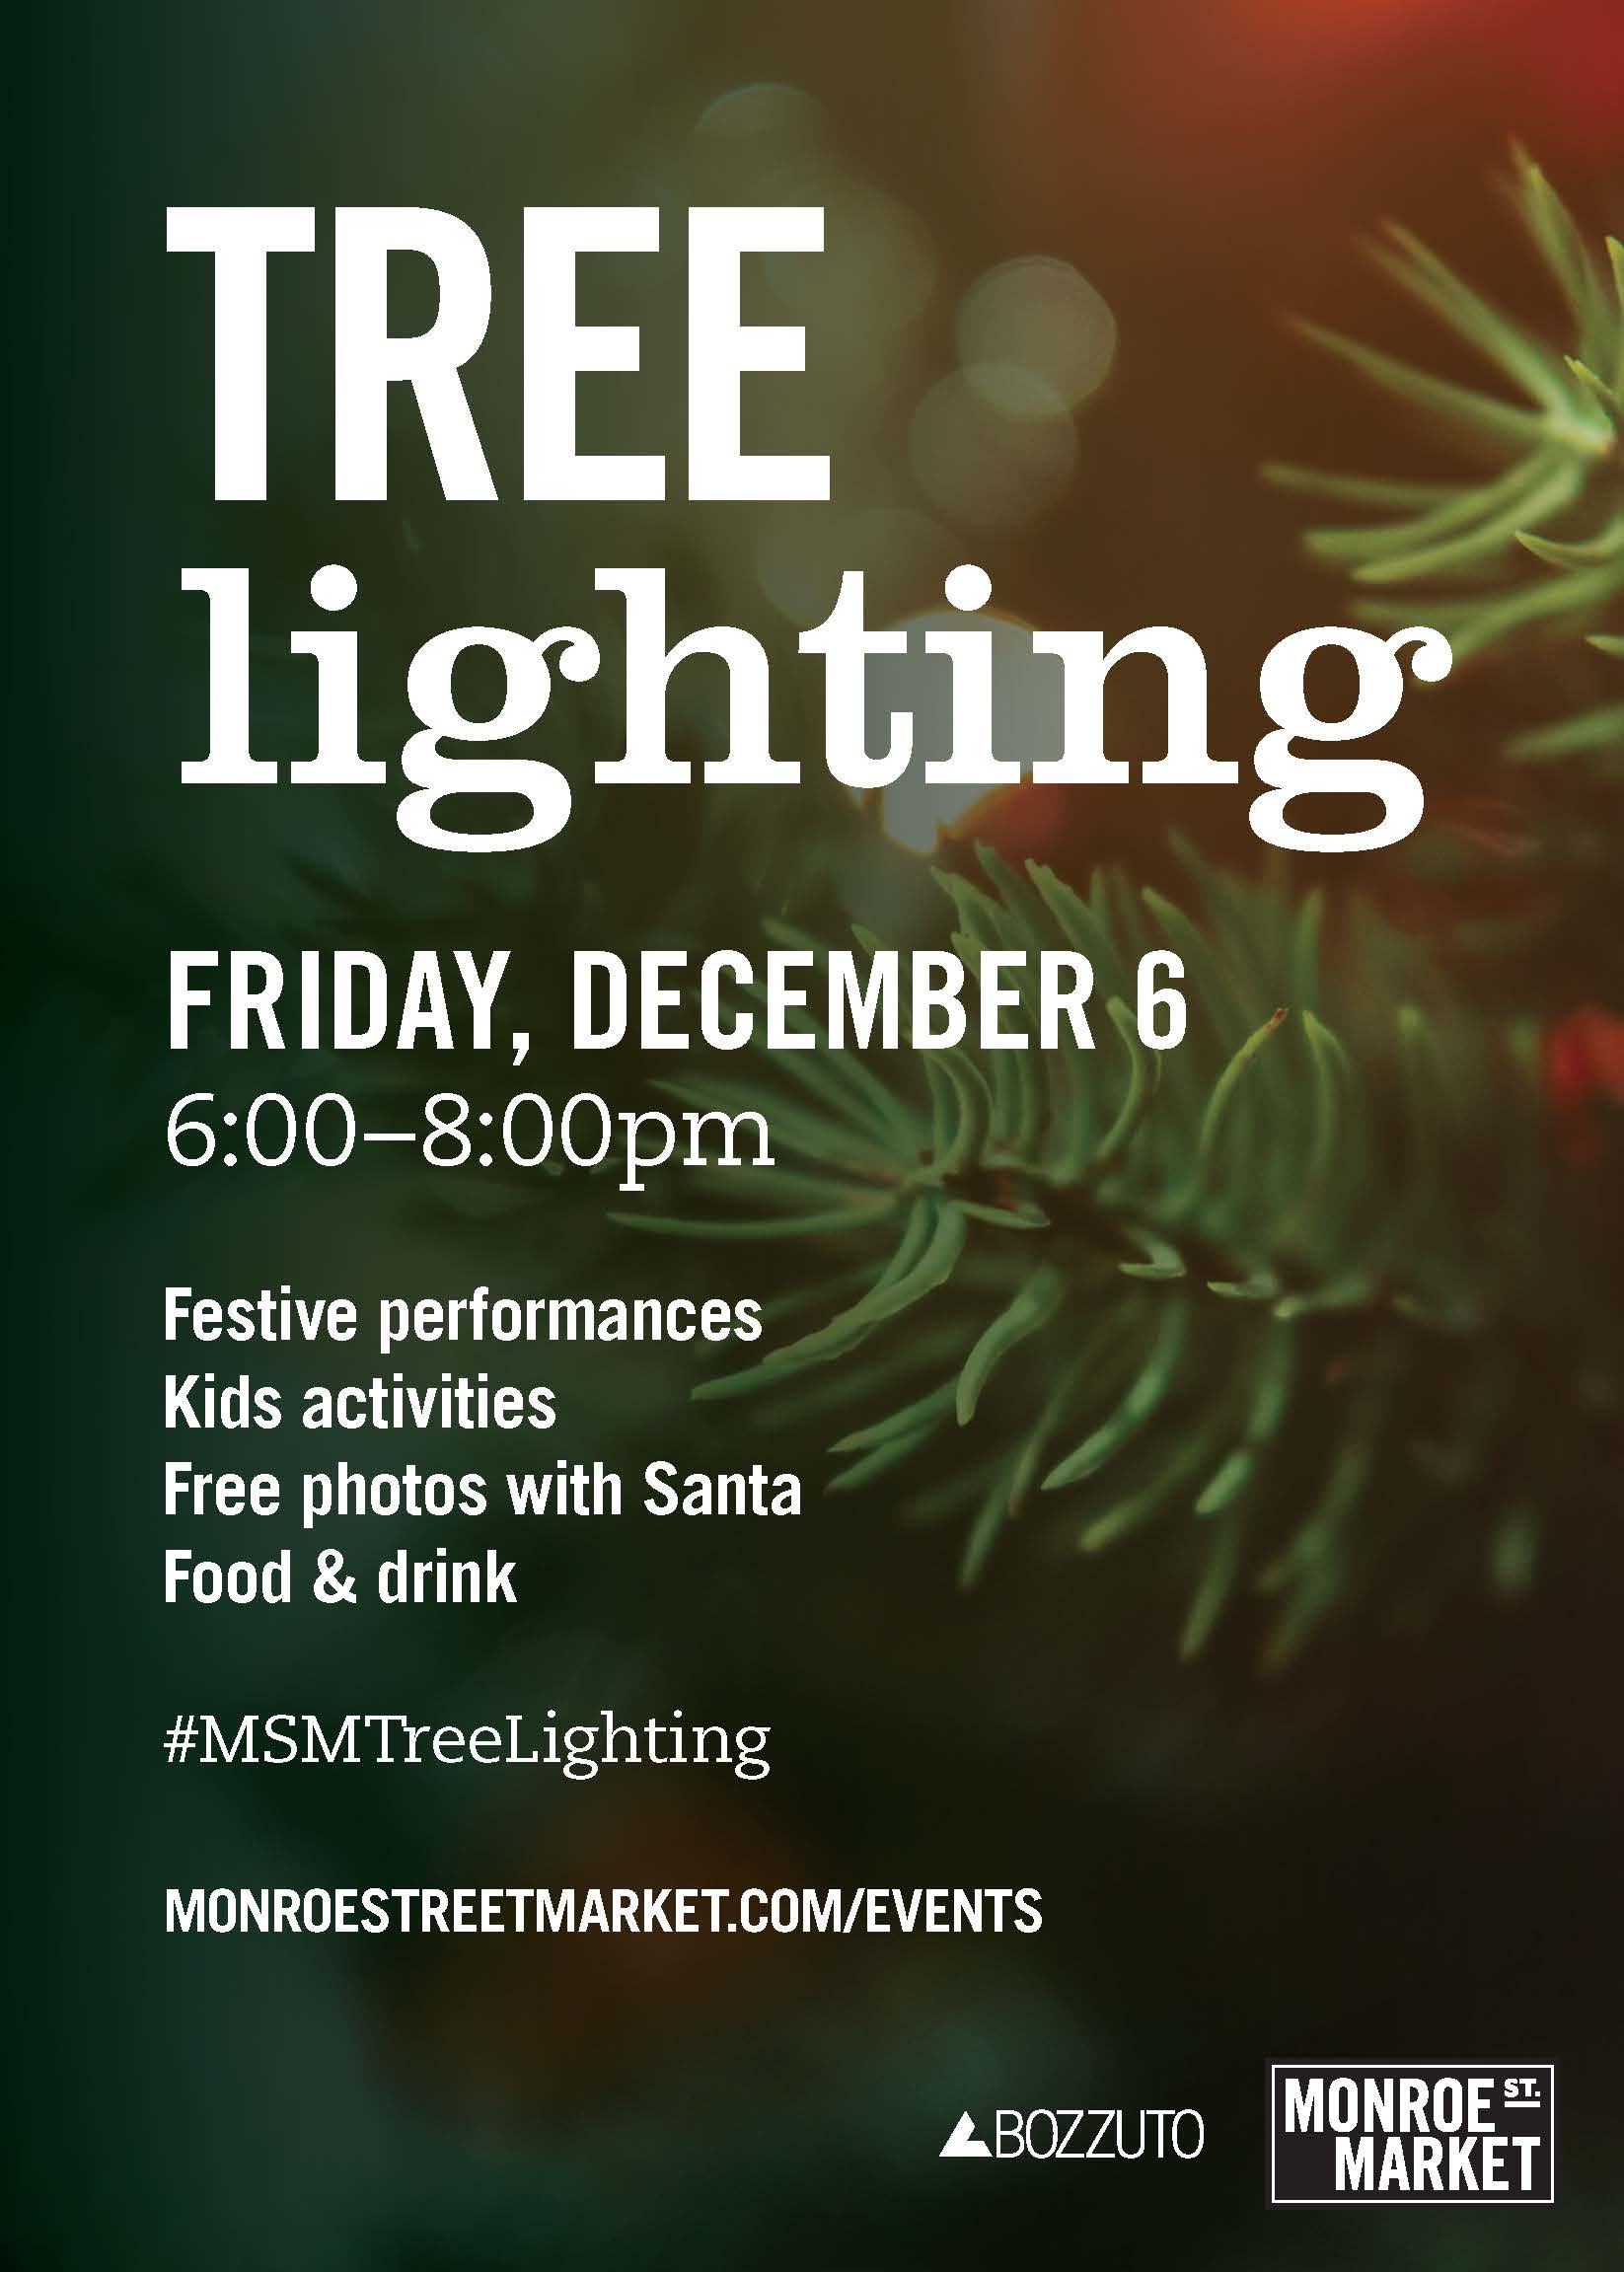 Monroe Street Market Annual Tree Lighting Event